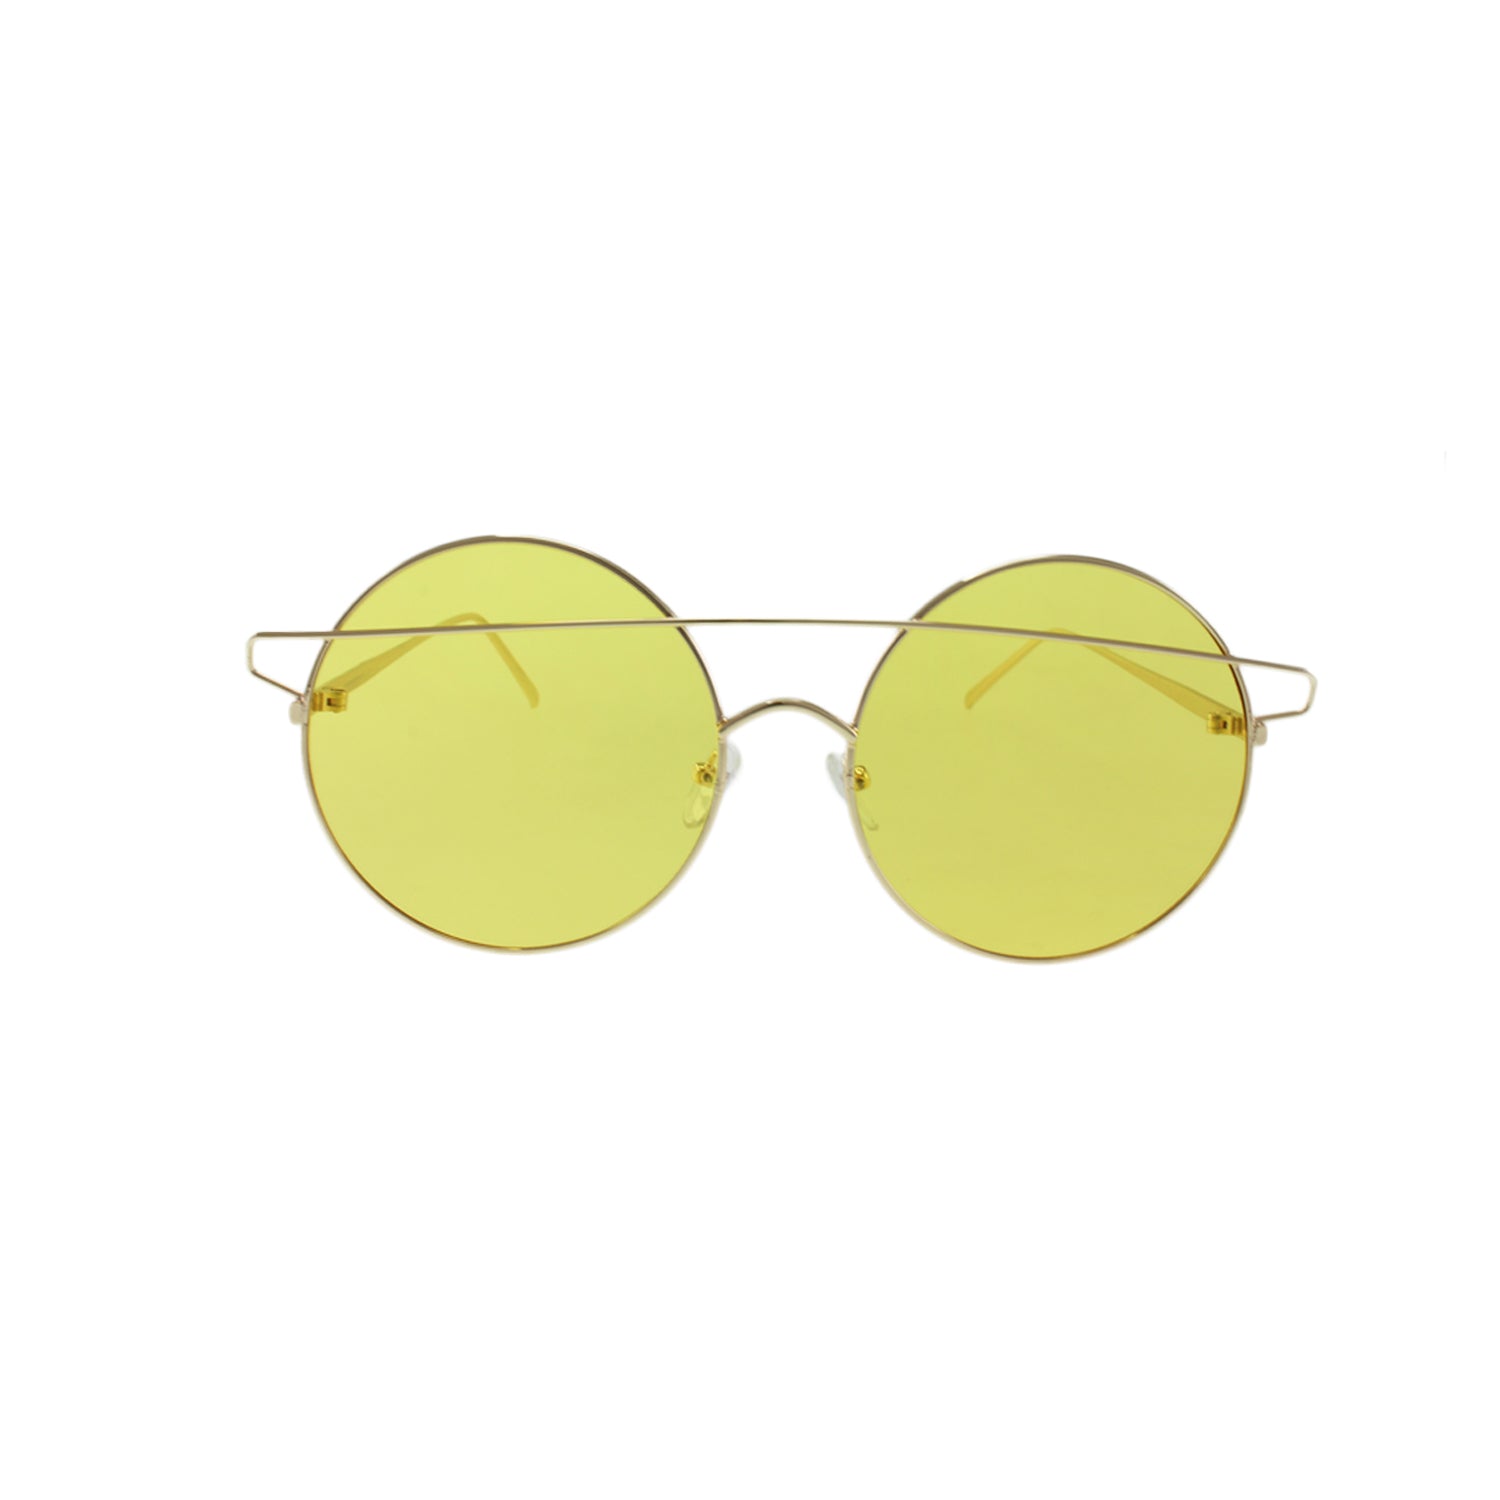 Jase New York Meridian Sunglasses in Yellow